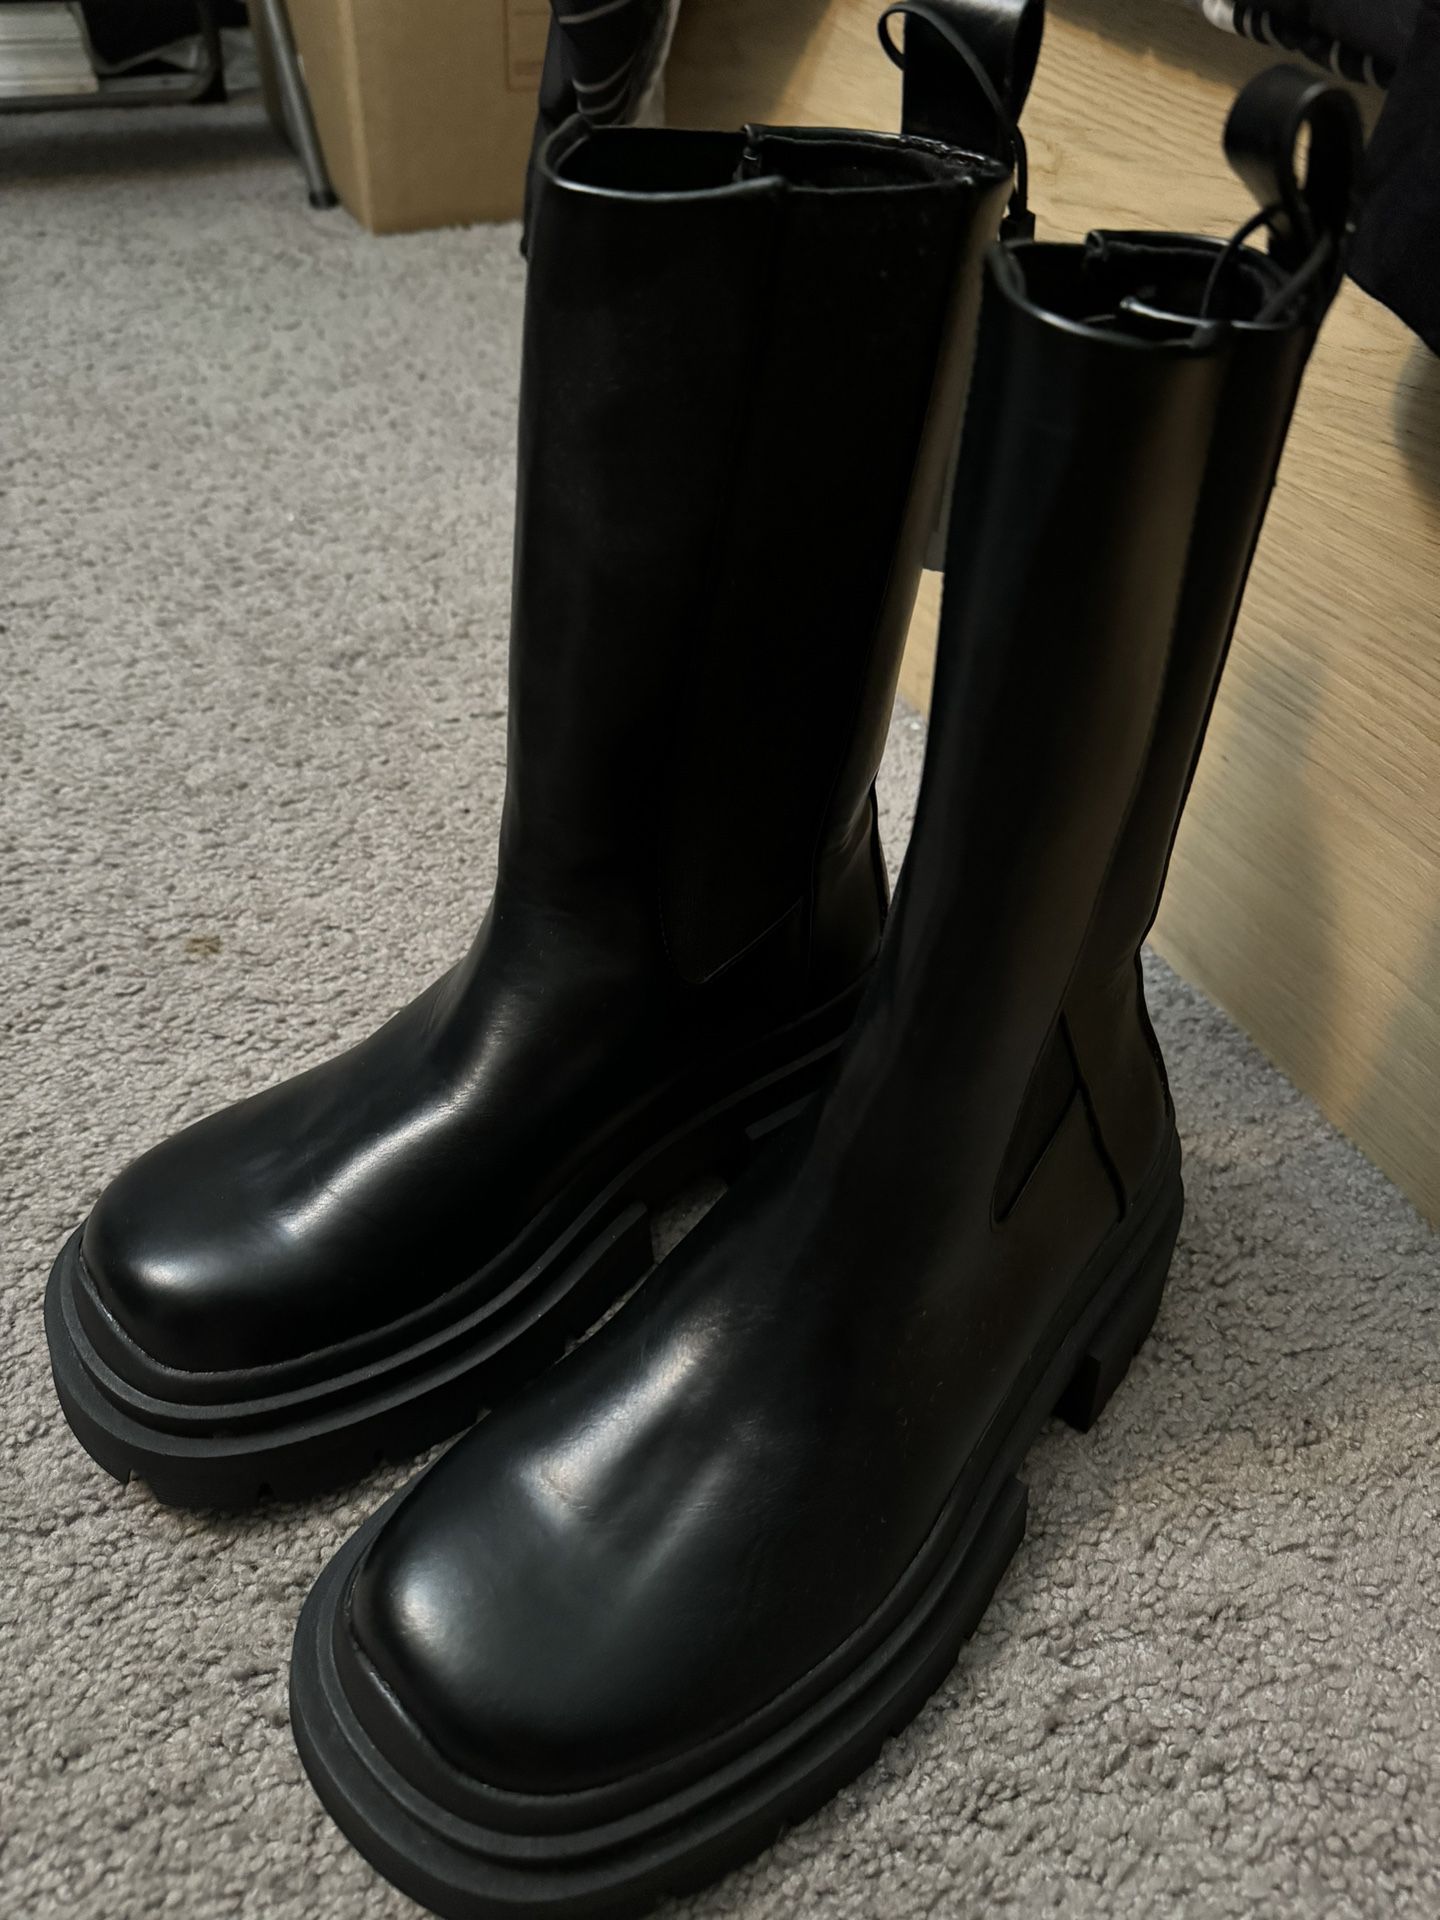 zara boots size 8 womens